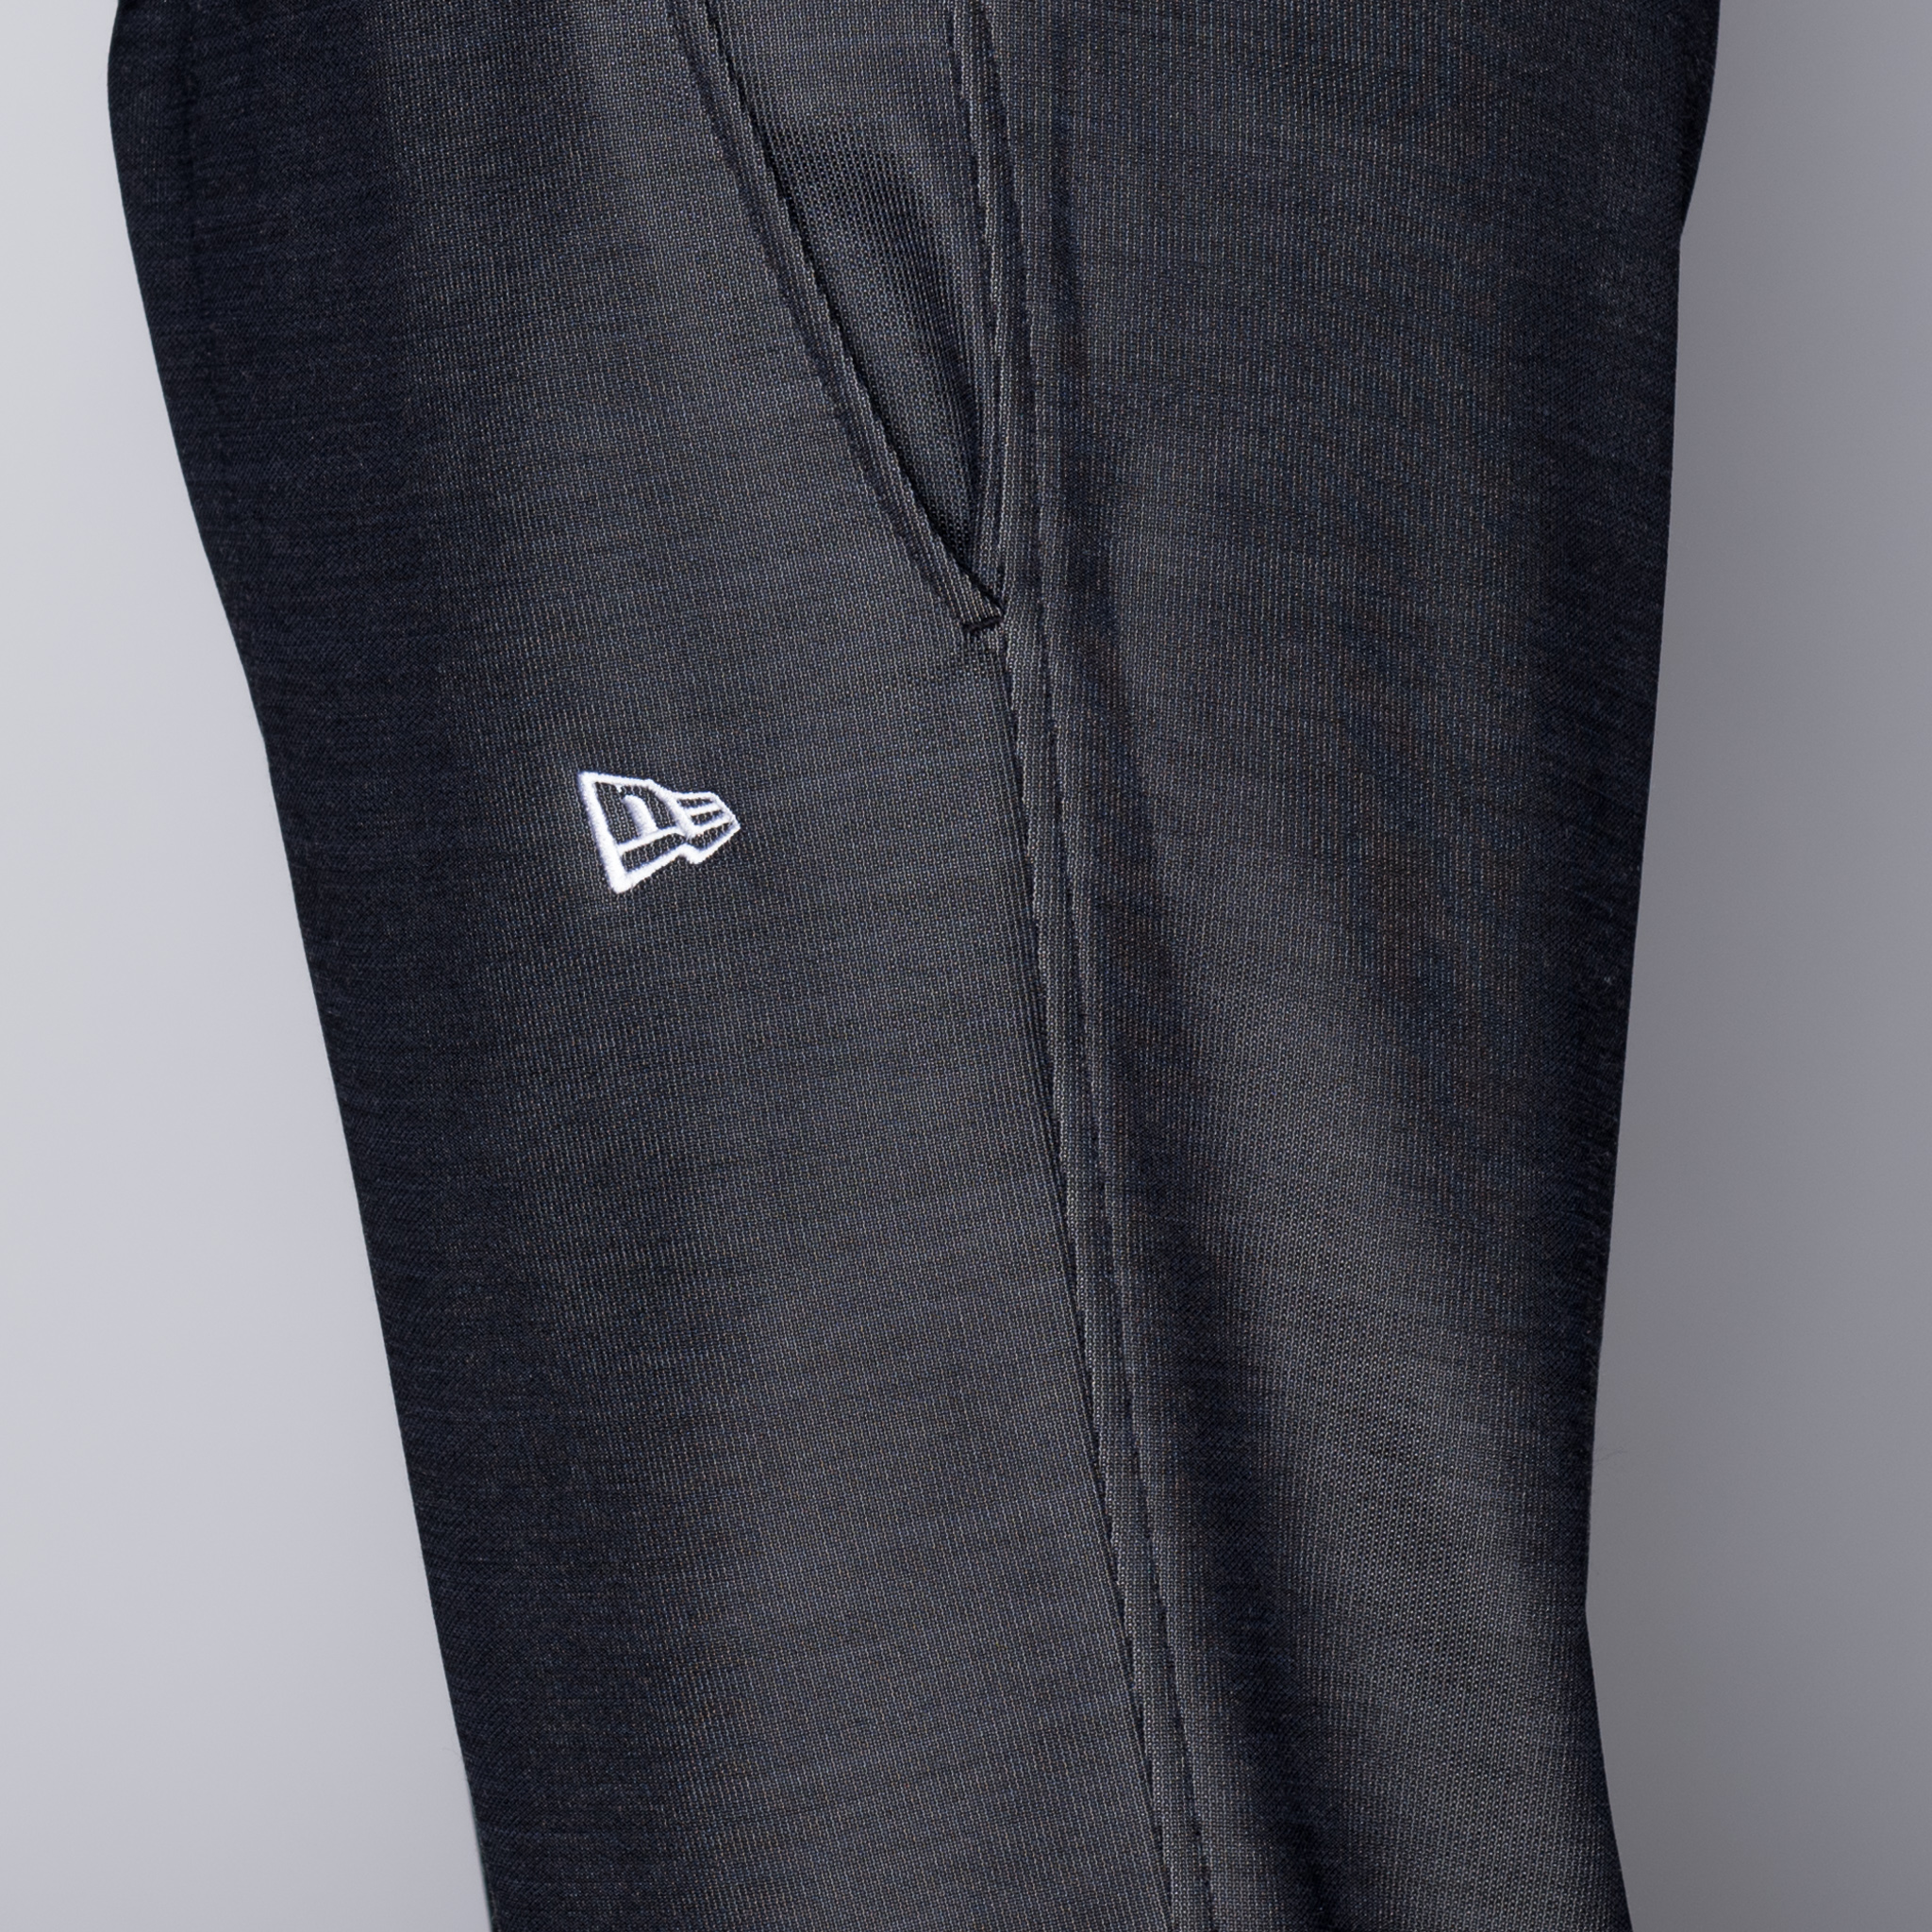 Pantalones de chándal NFL Logo Engineered, negro